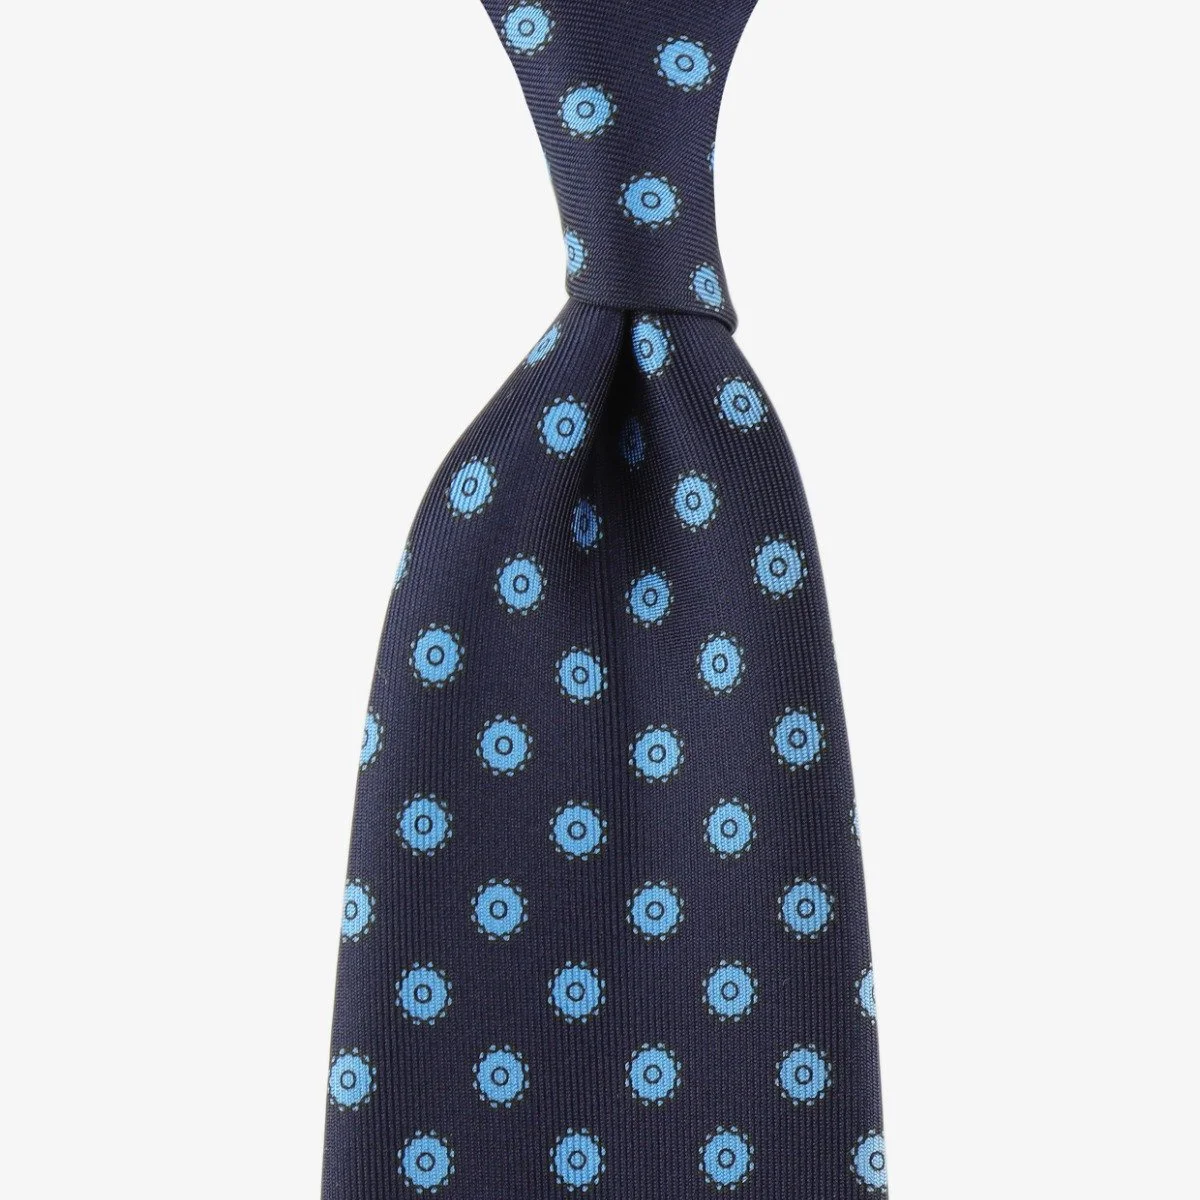 Shibumi Firenze midnight silk tie with light blue circle pattern